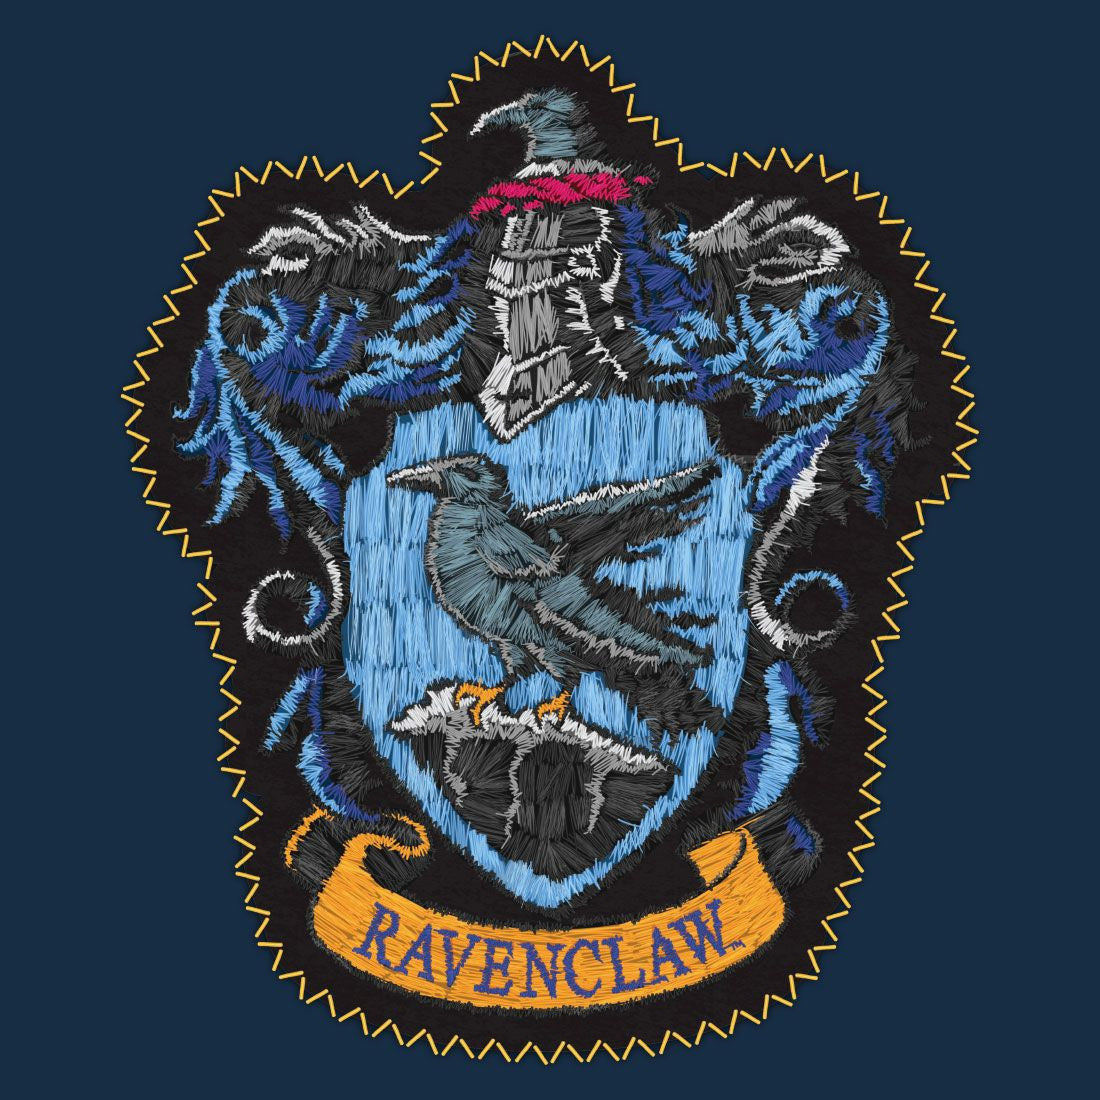 Sweat-shirt Harry Potter - Ravenclaw Emblem